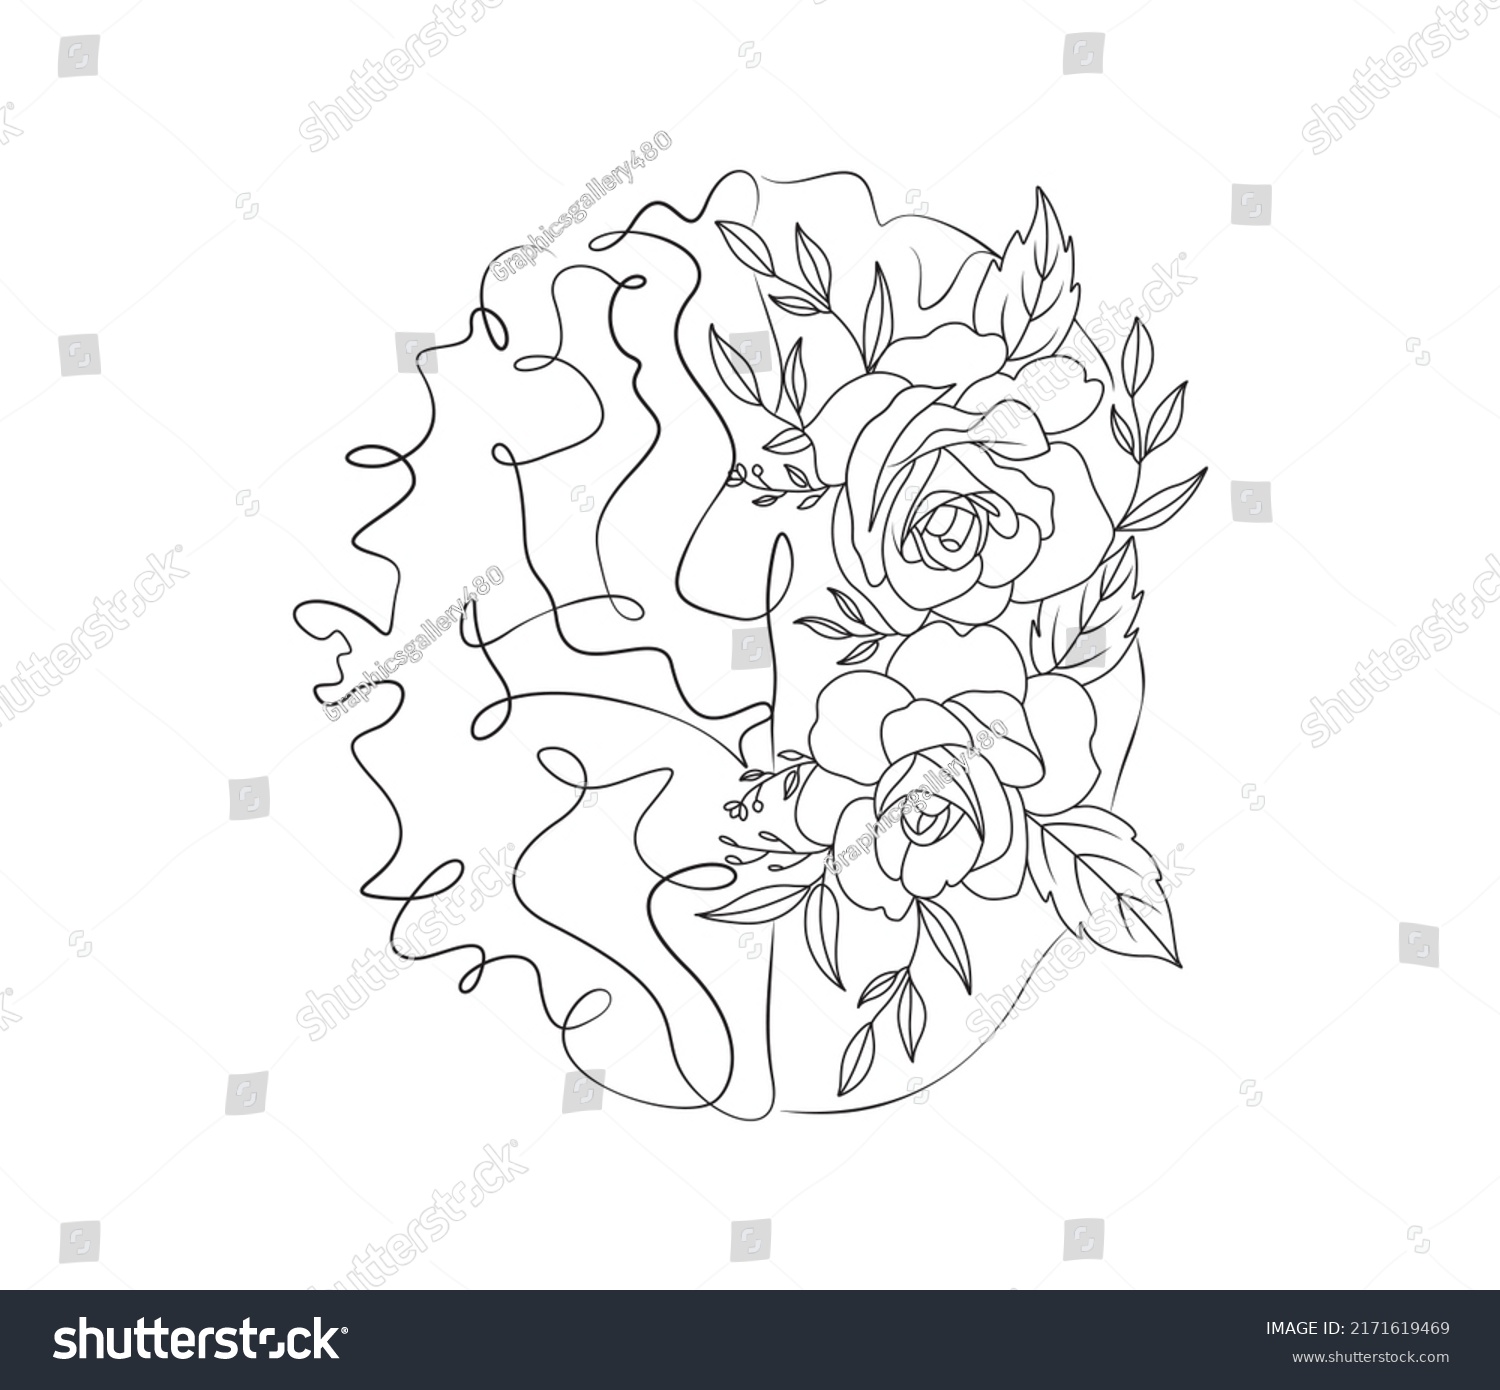 SVG of Brain line art illustration, flower drawing , victor file , print , concept drawing  svg